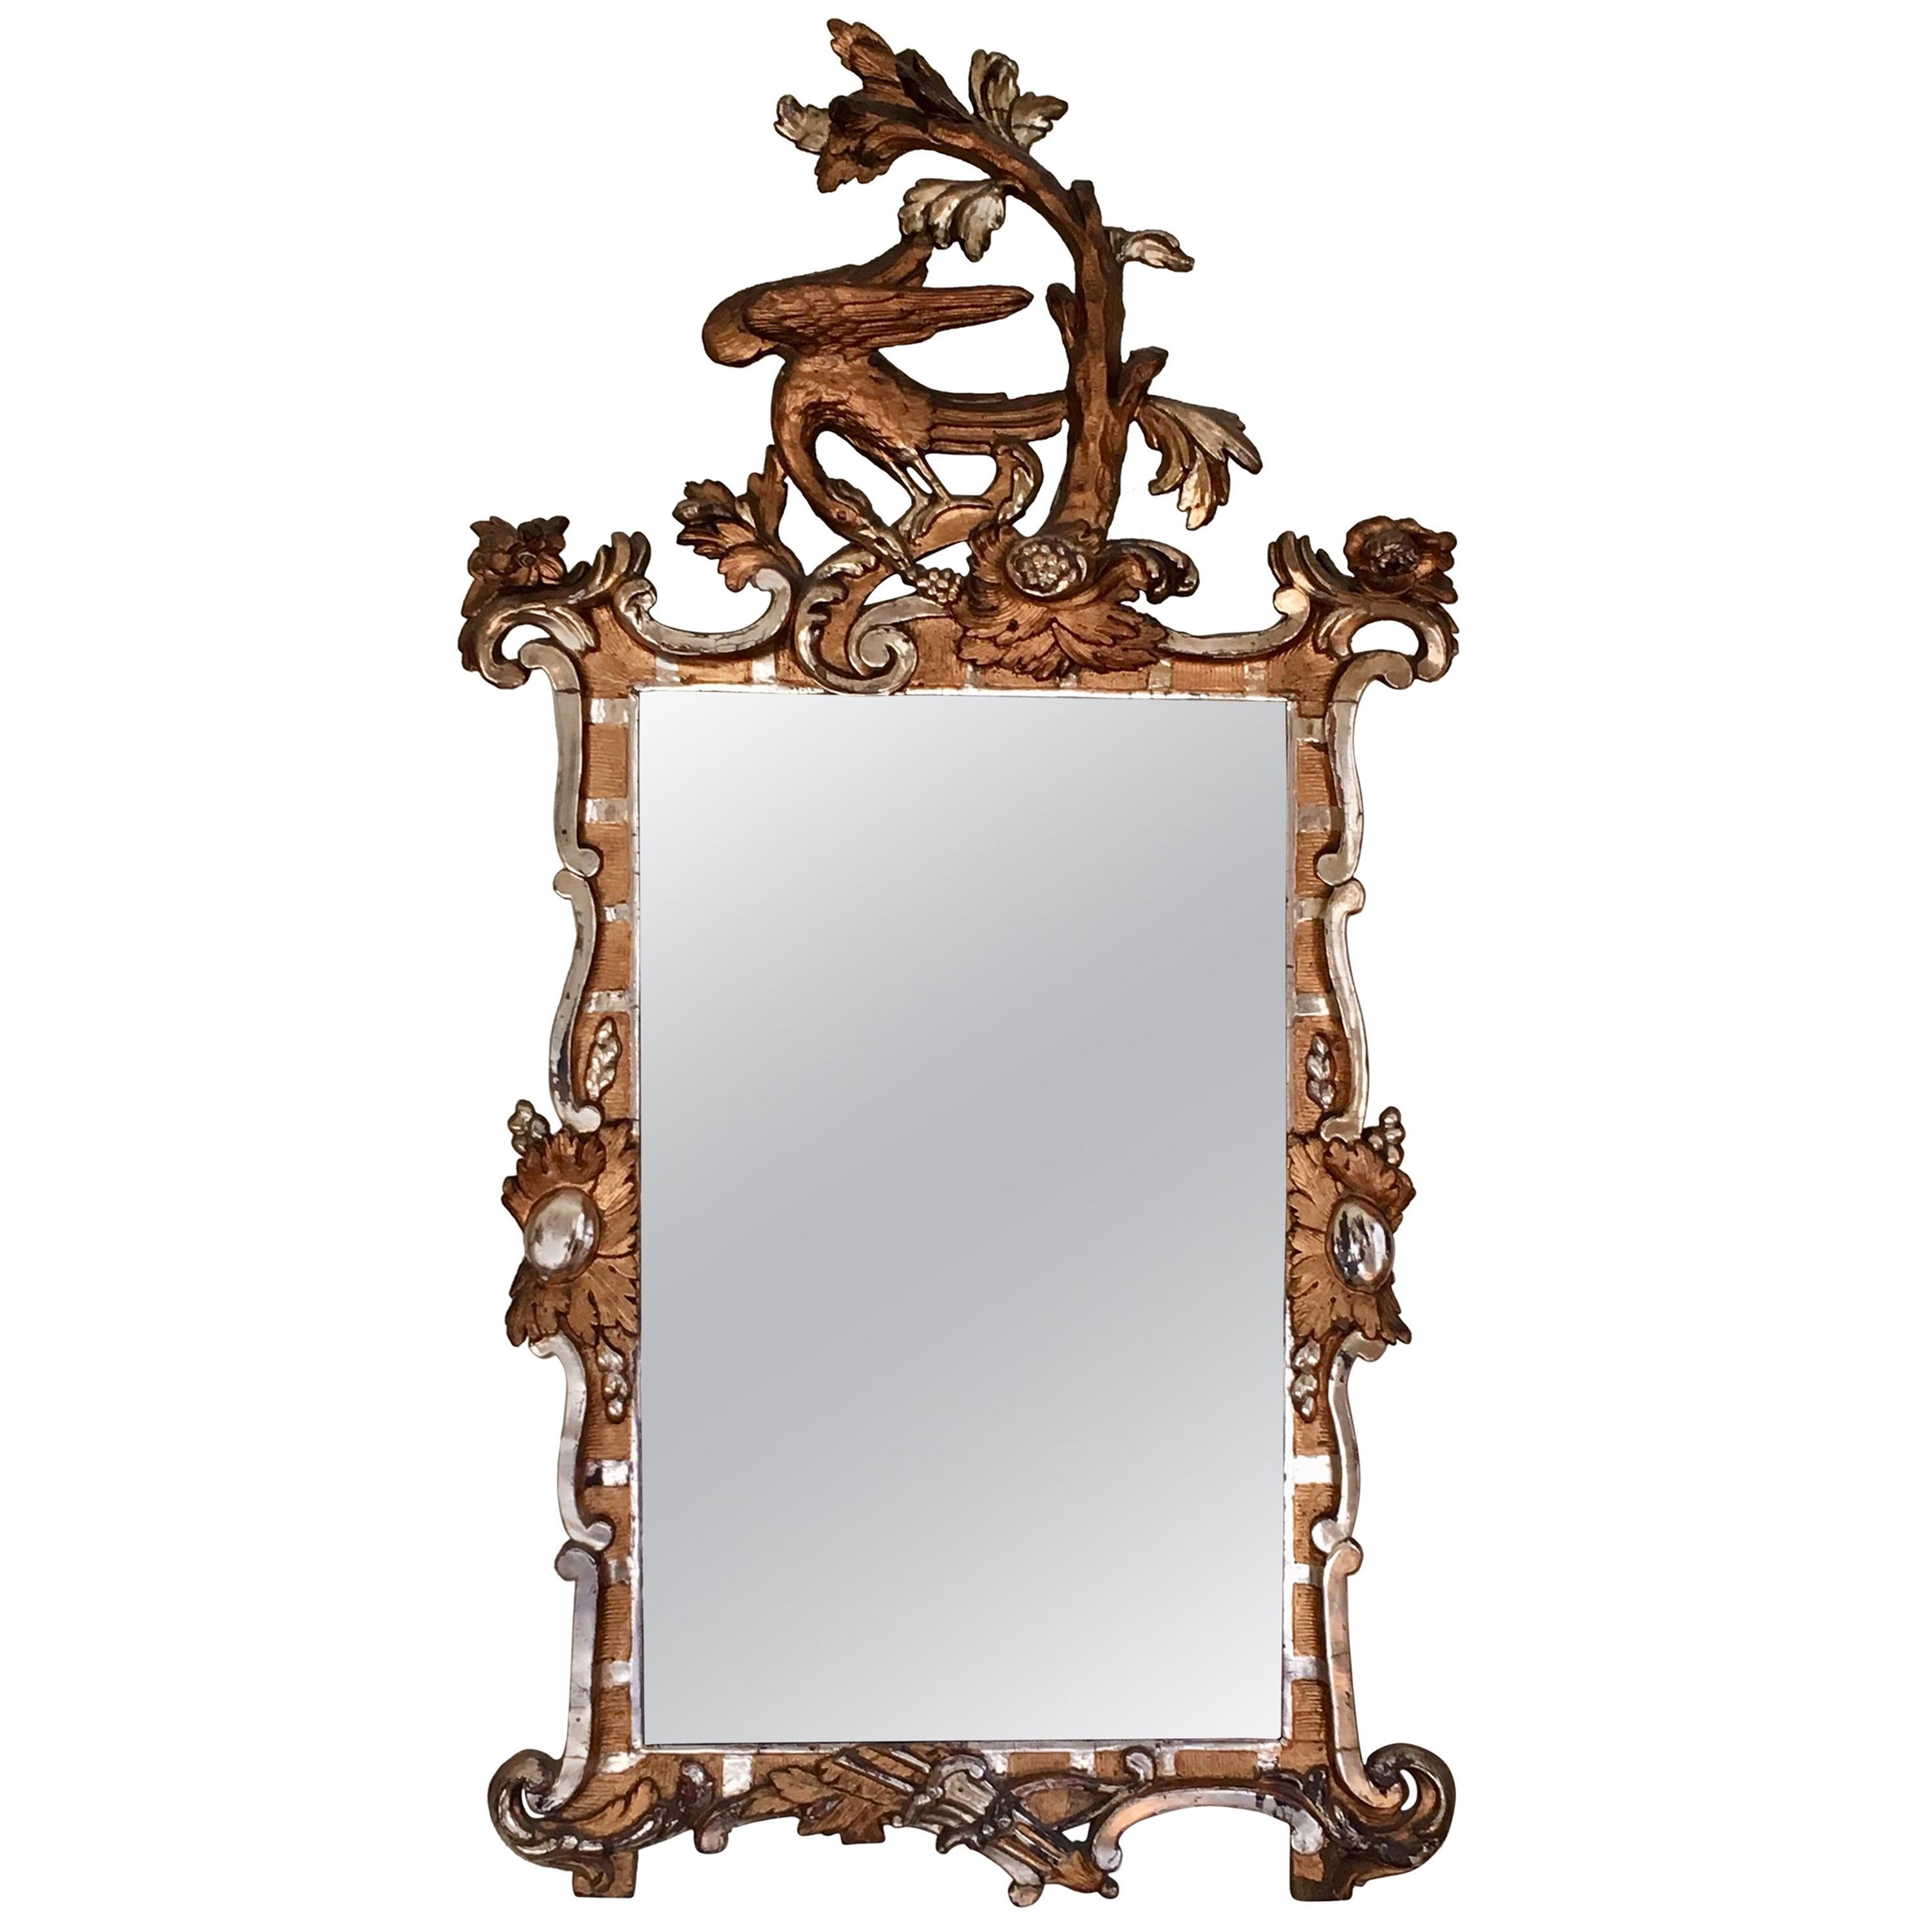 Danish/German 18th Century Giltwood Rococo Mirror with Ho Ho Bird For Sale